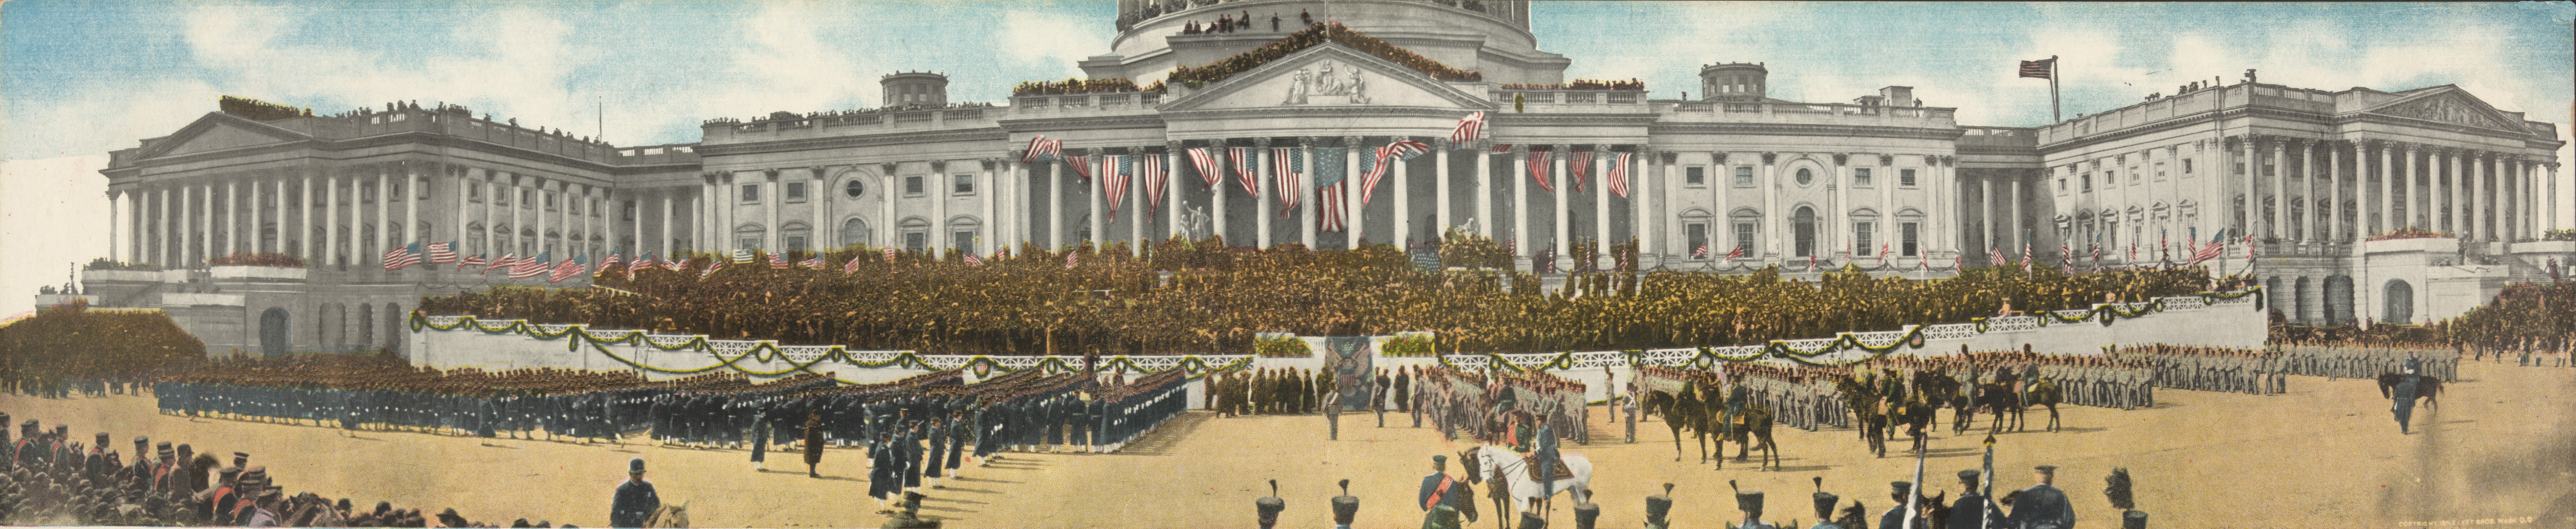 roosevelt-inauguration-1905